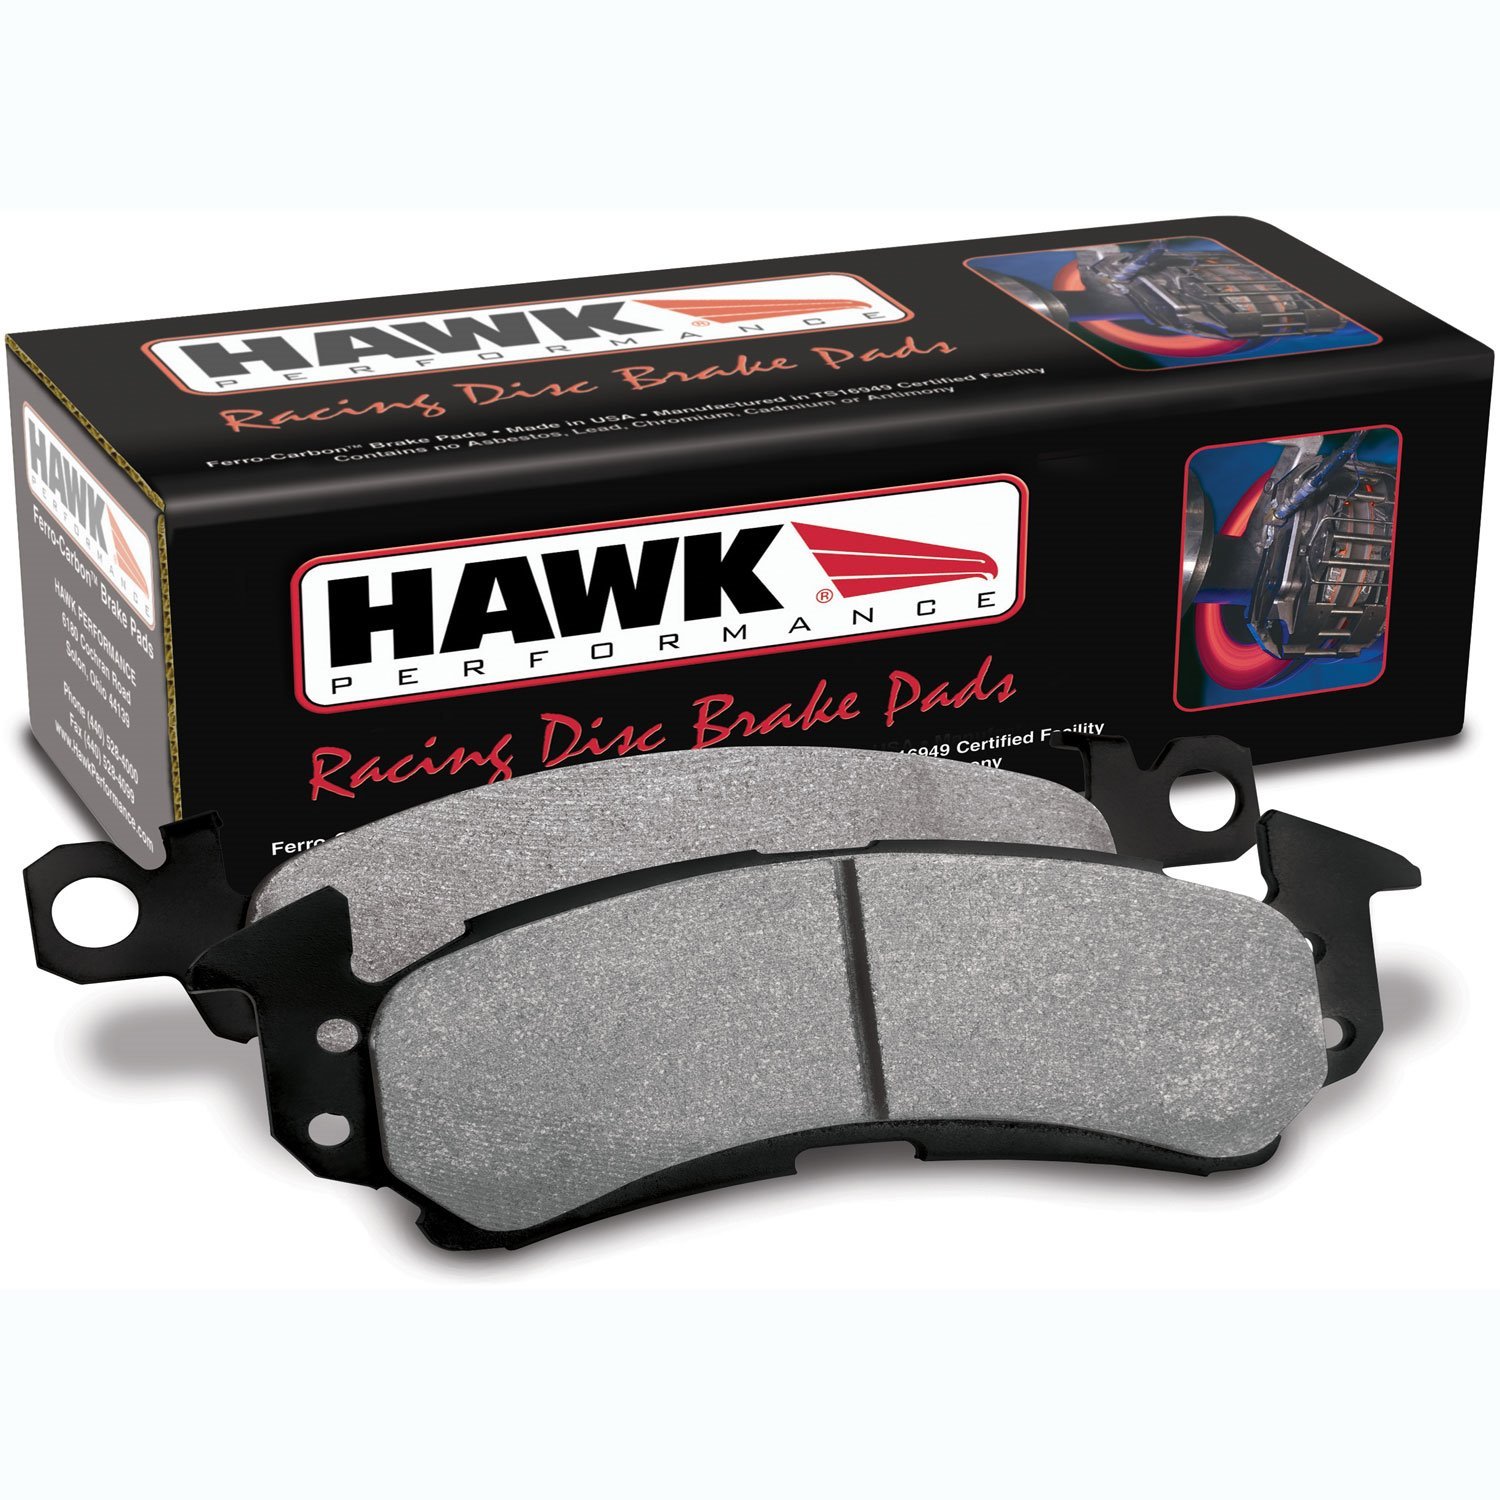 Hawk Performance Blue 9012 Racing Brake Pads